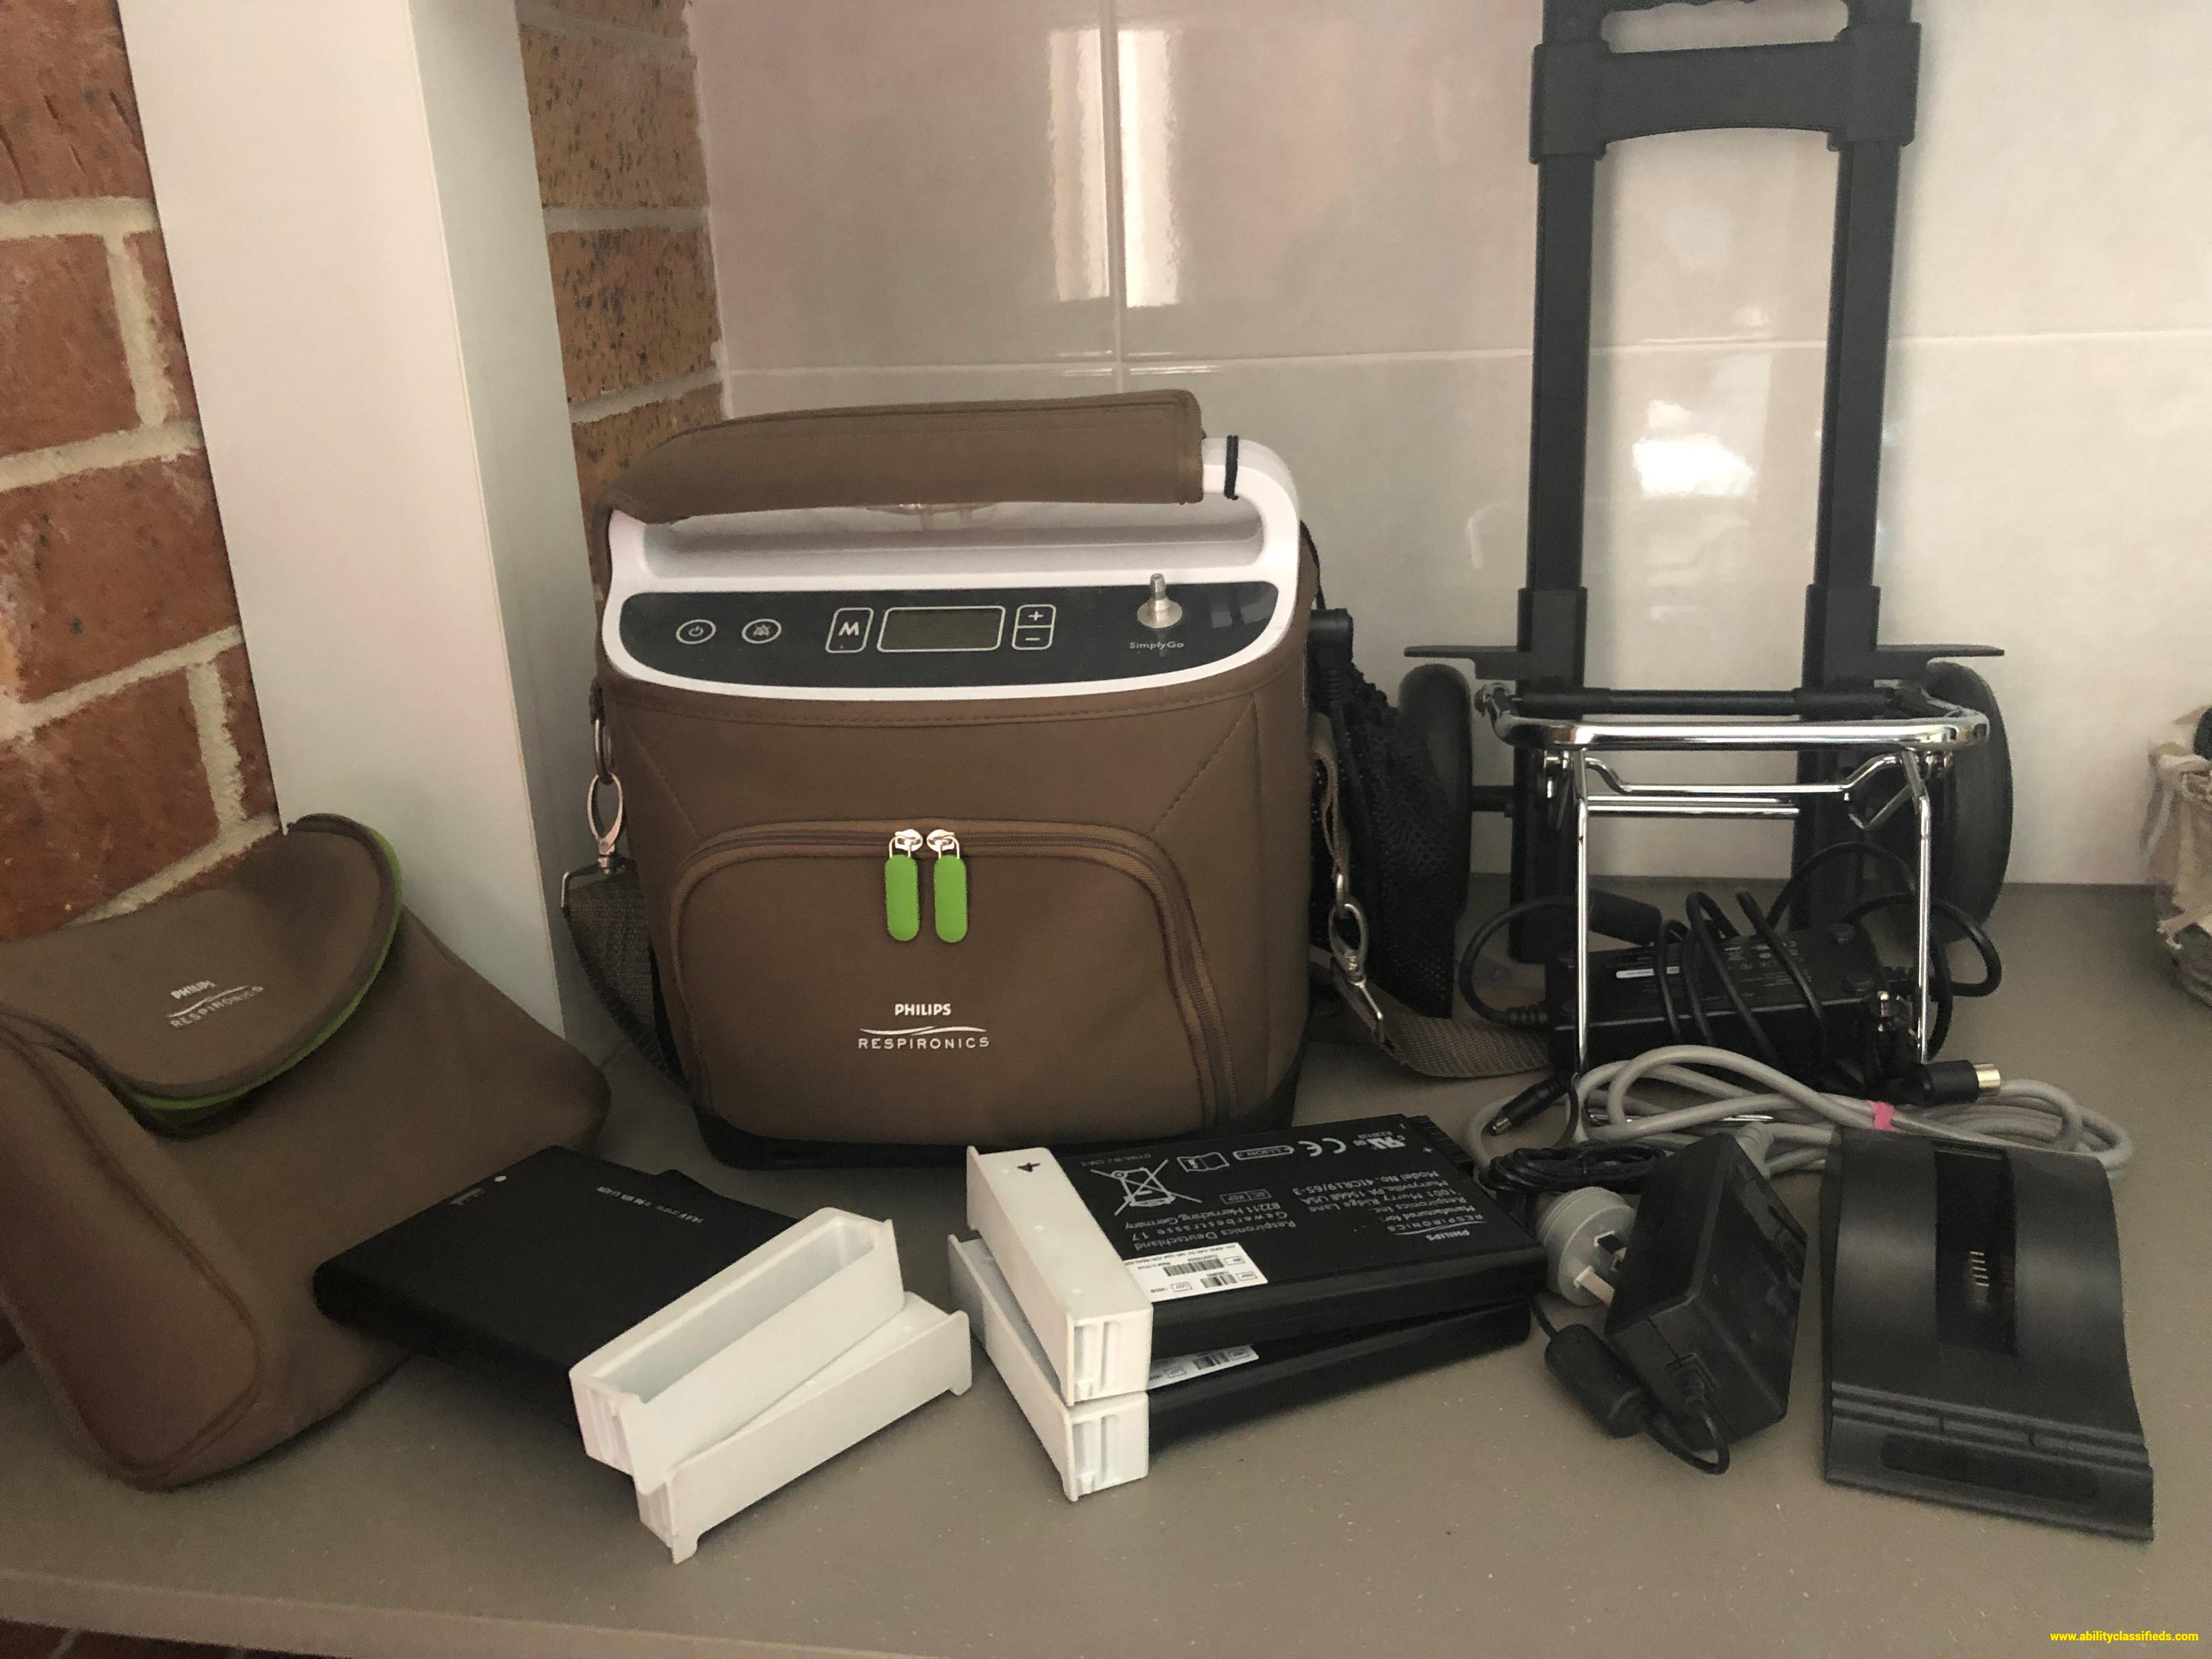 Phillips Portable Oxygen Concentrator Plus Accessories